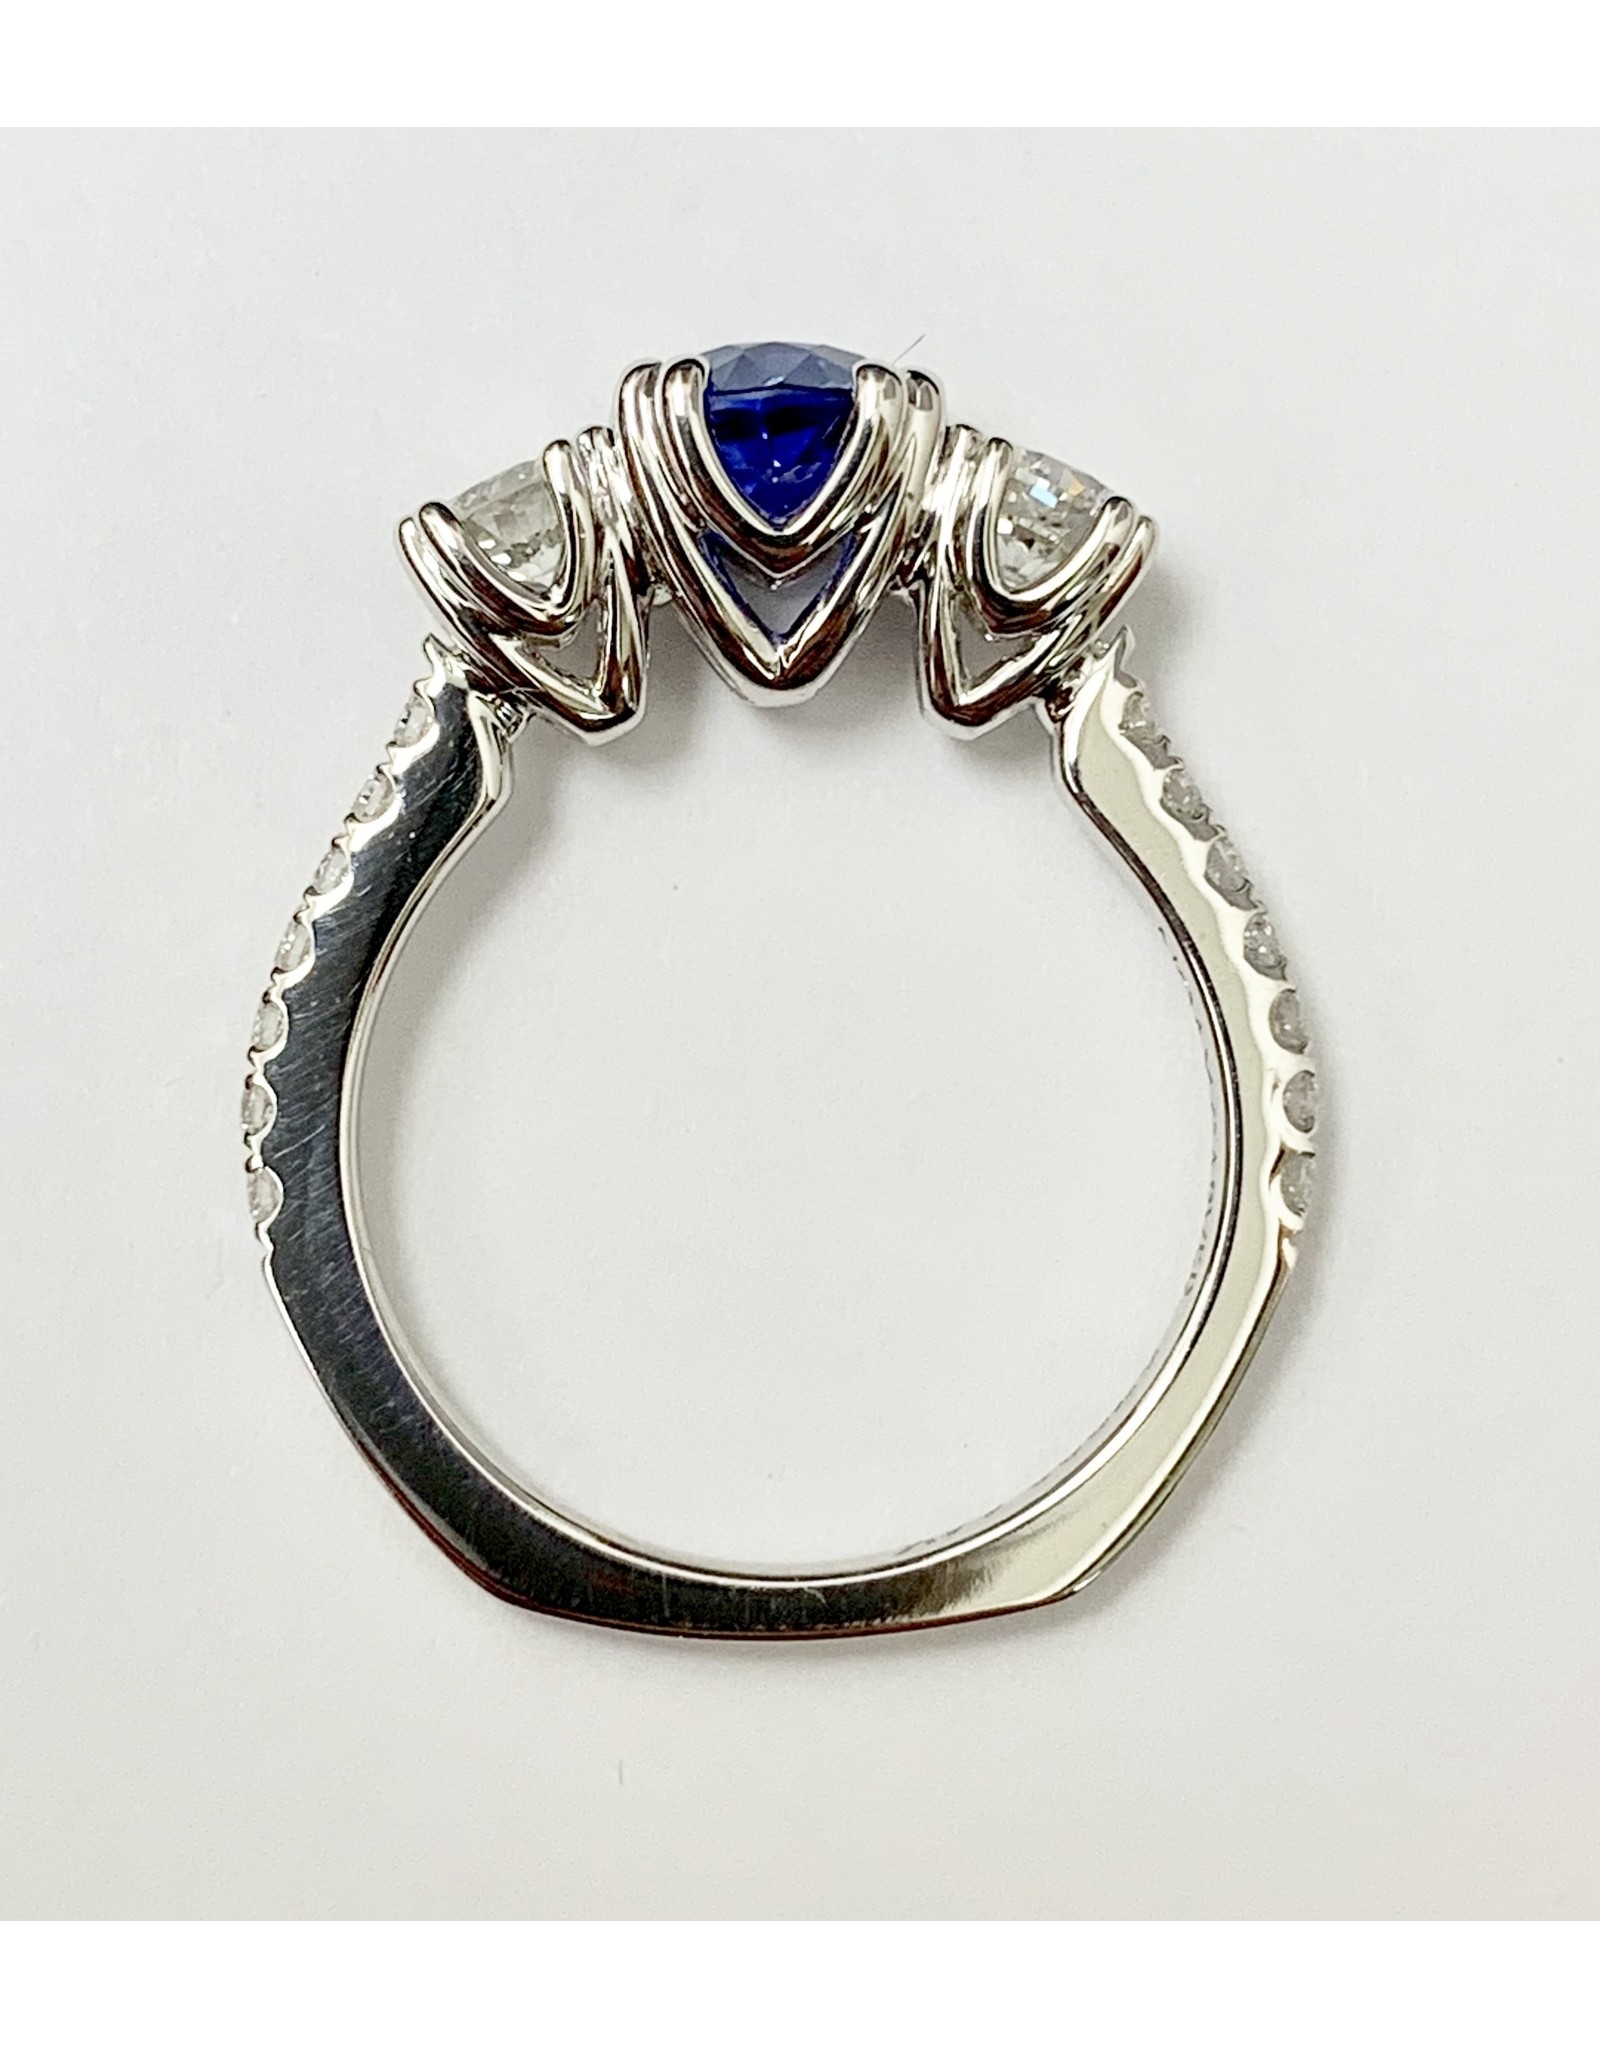 Noam Carver Sapphire & Diamond Ring 14KW